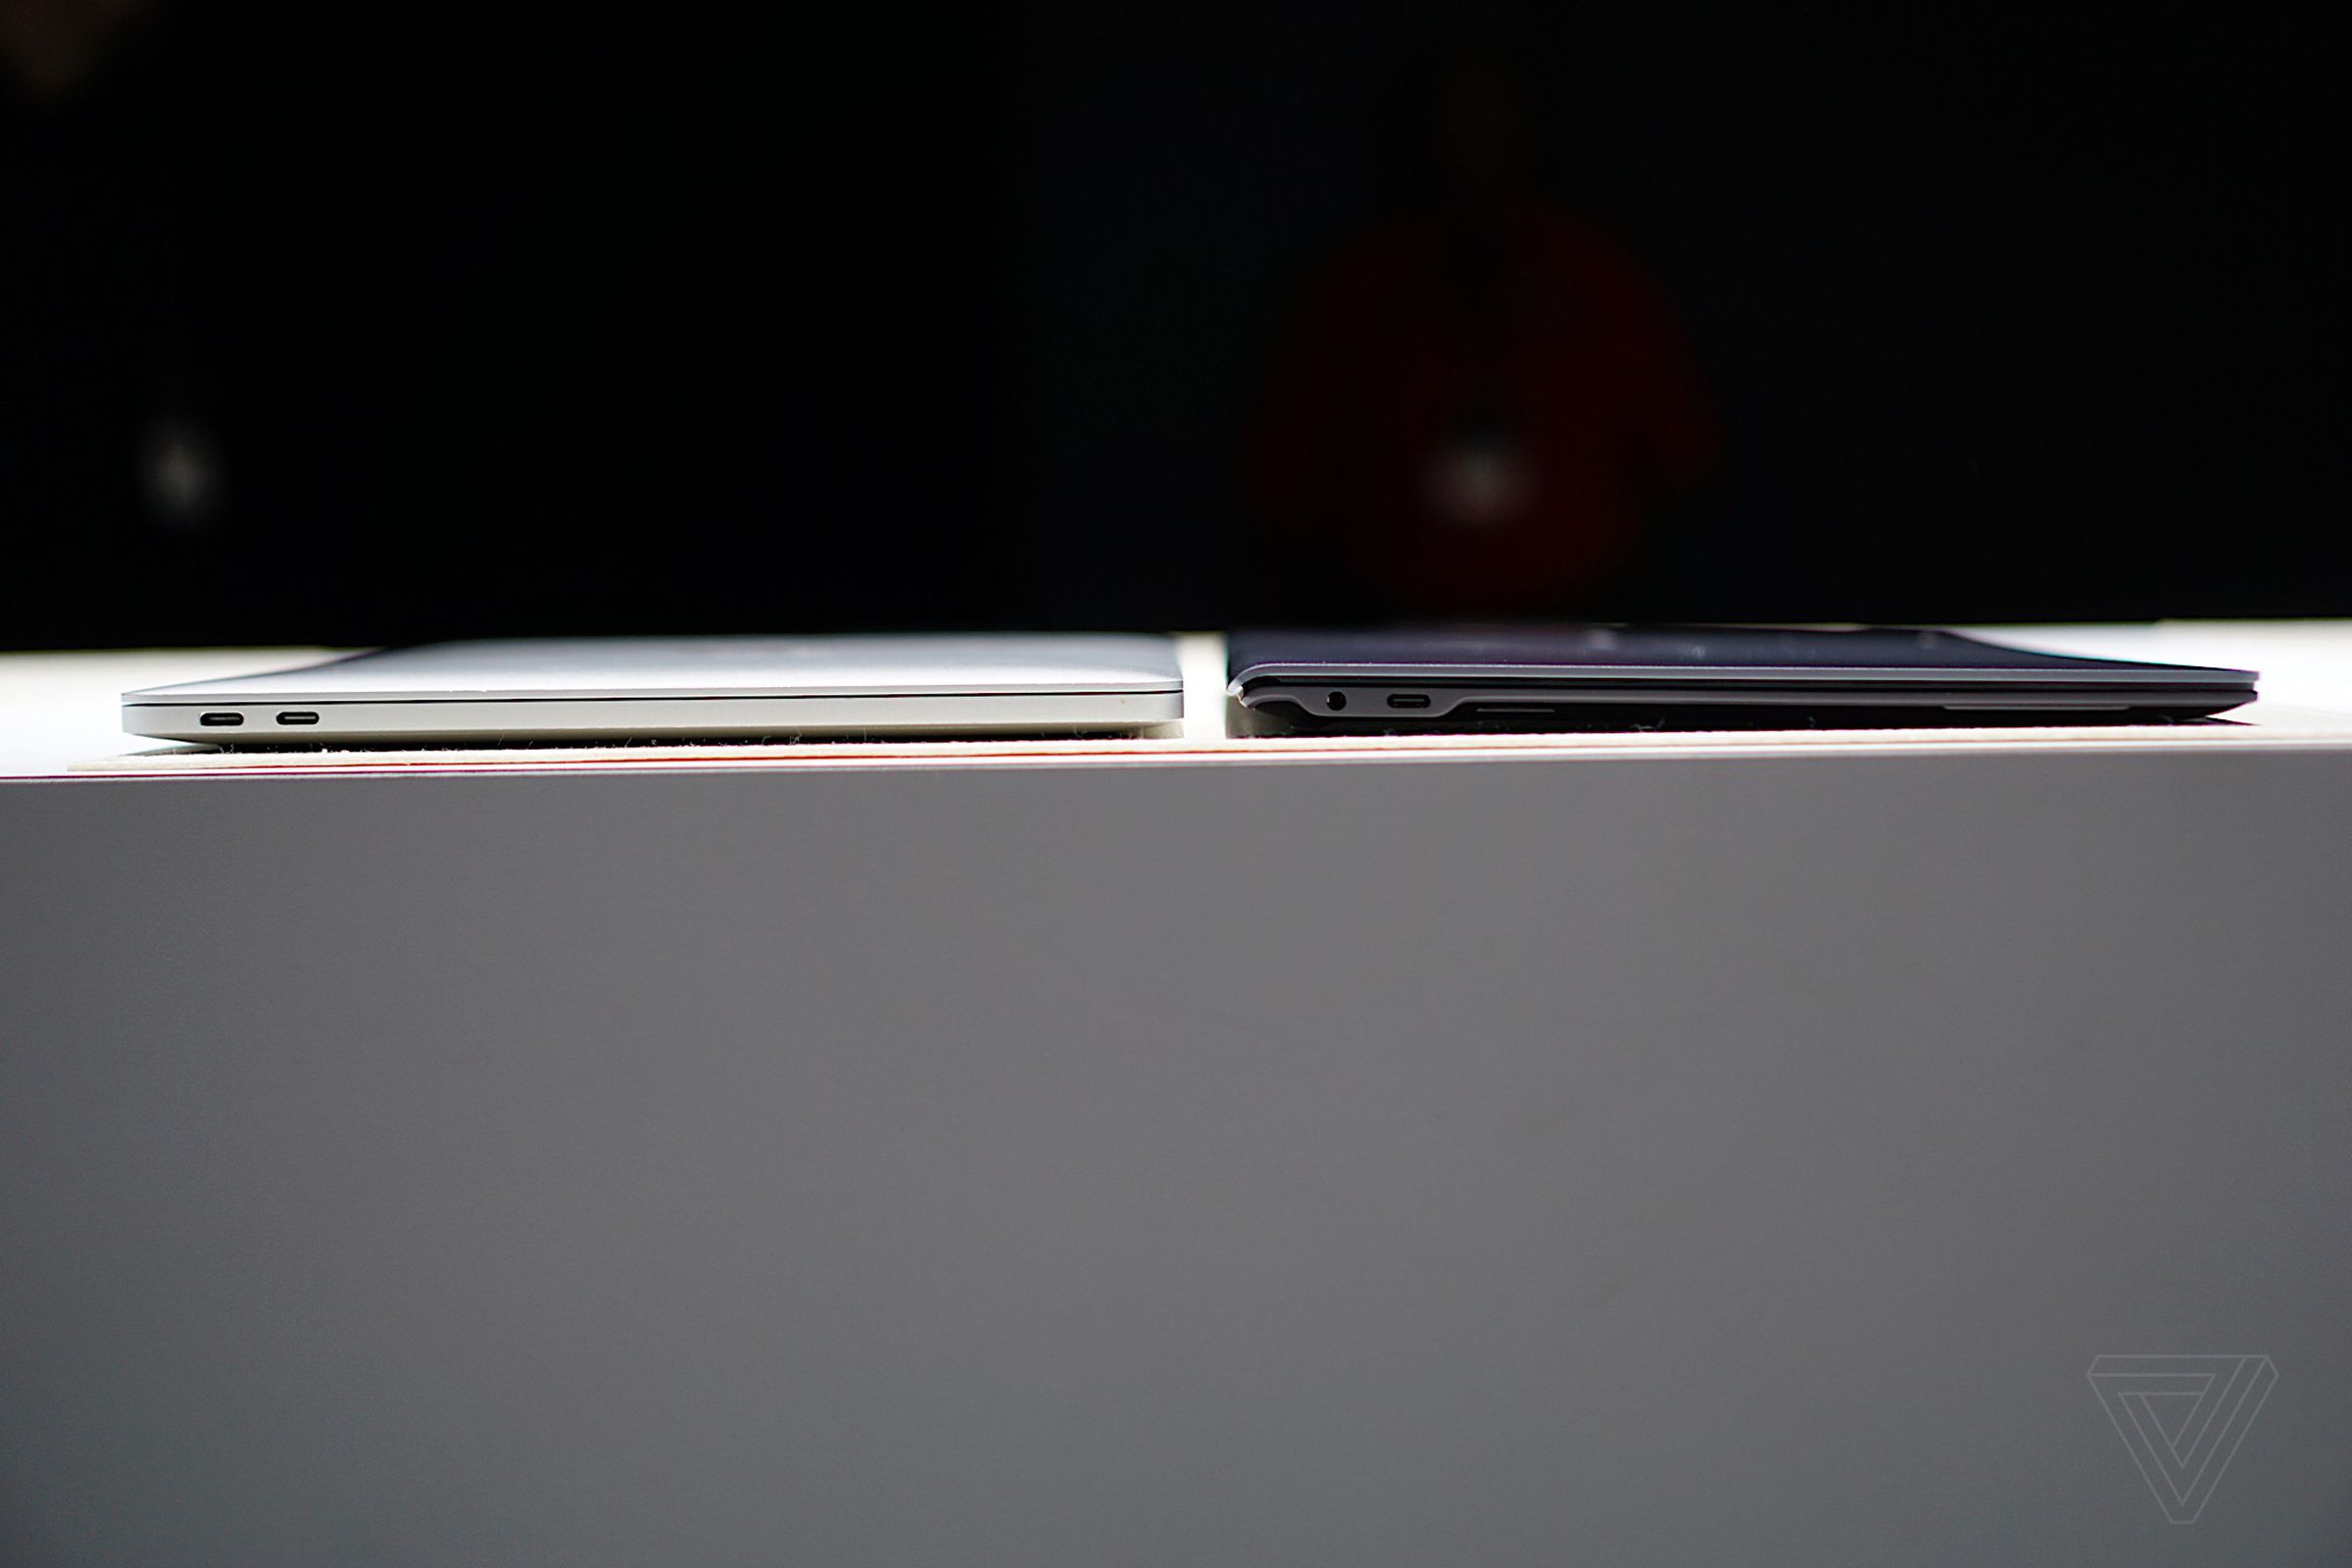 Galaxy Book S compared to a MacBook Pro